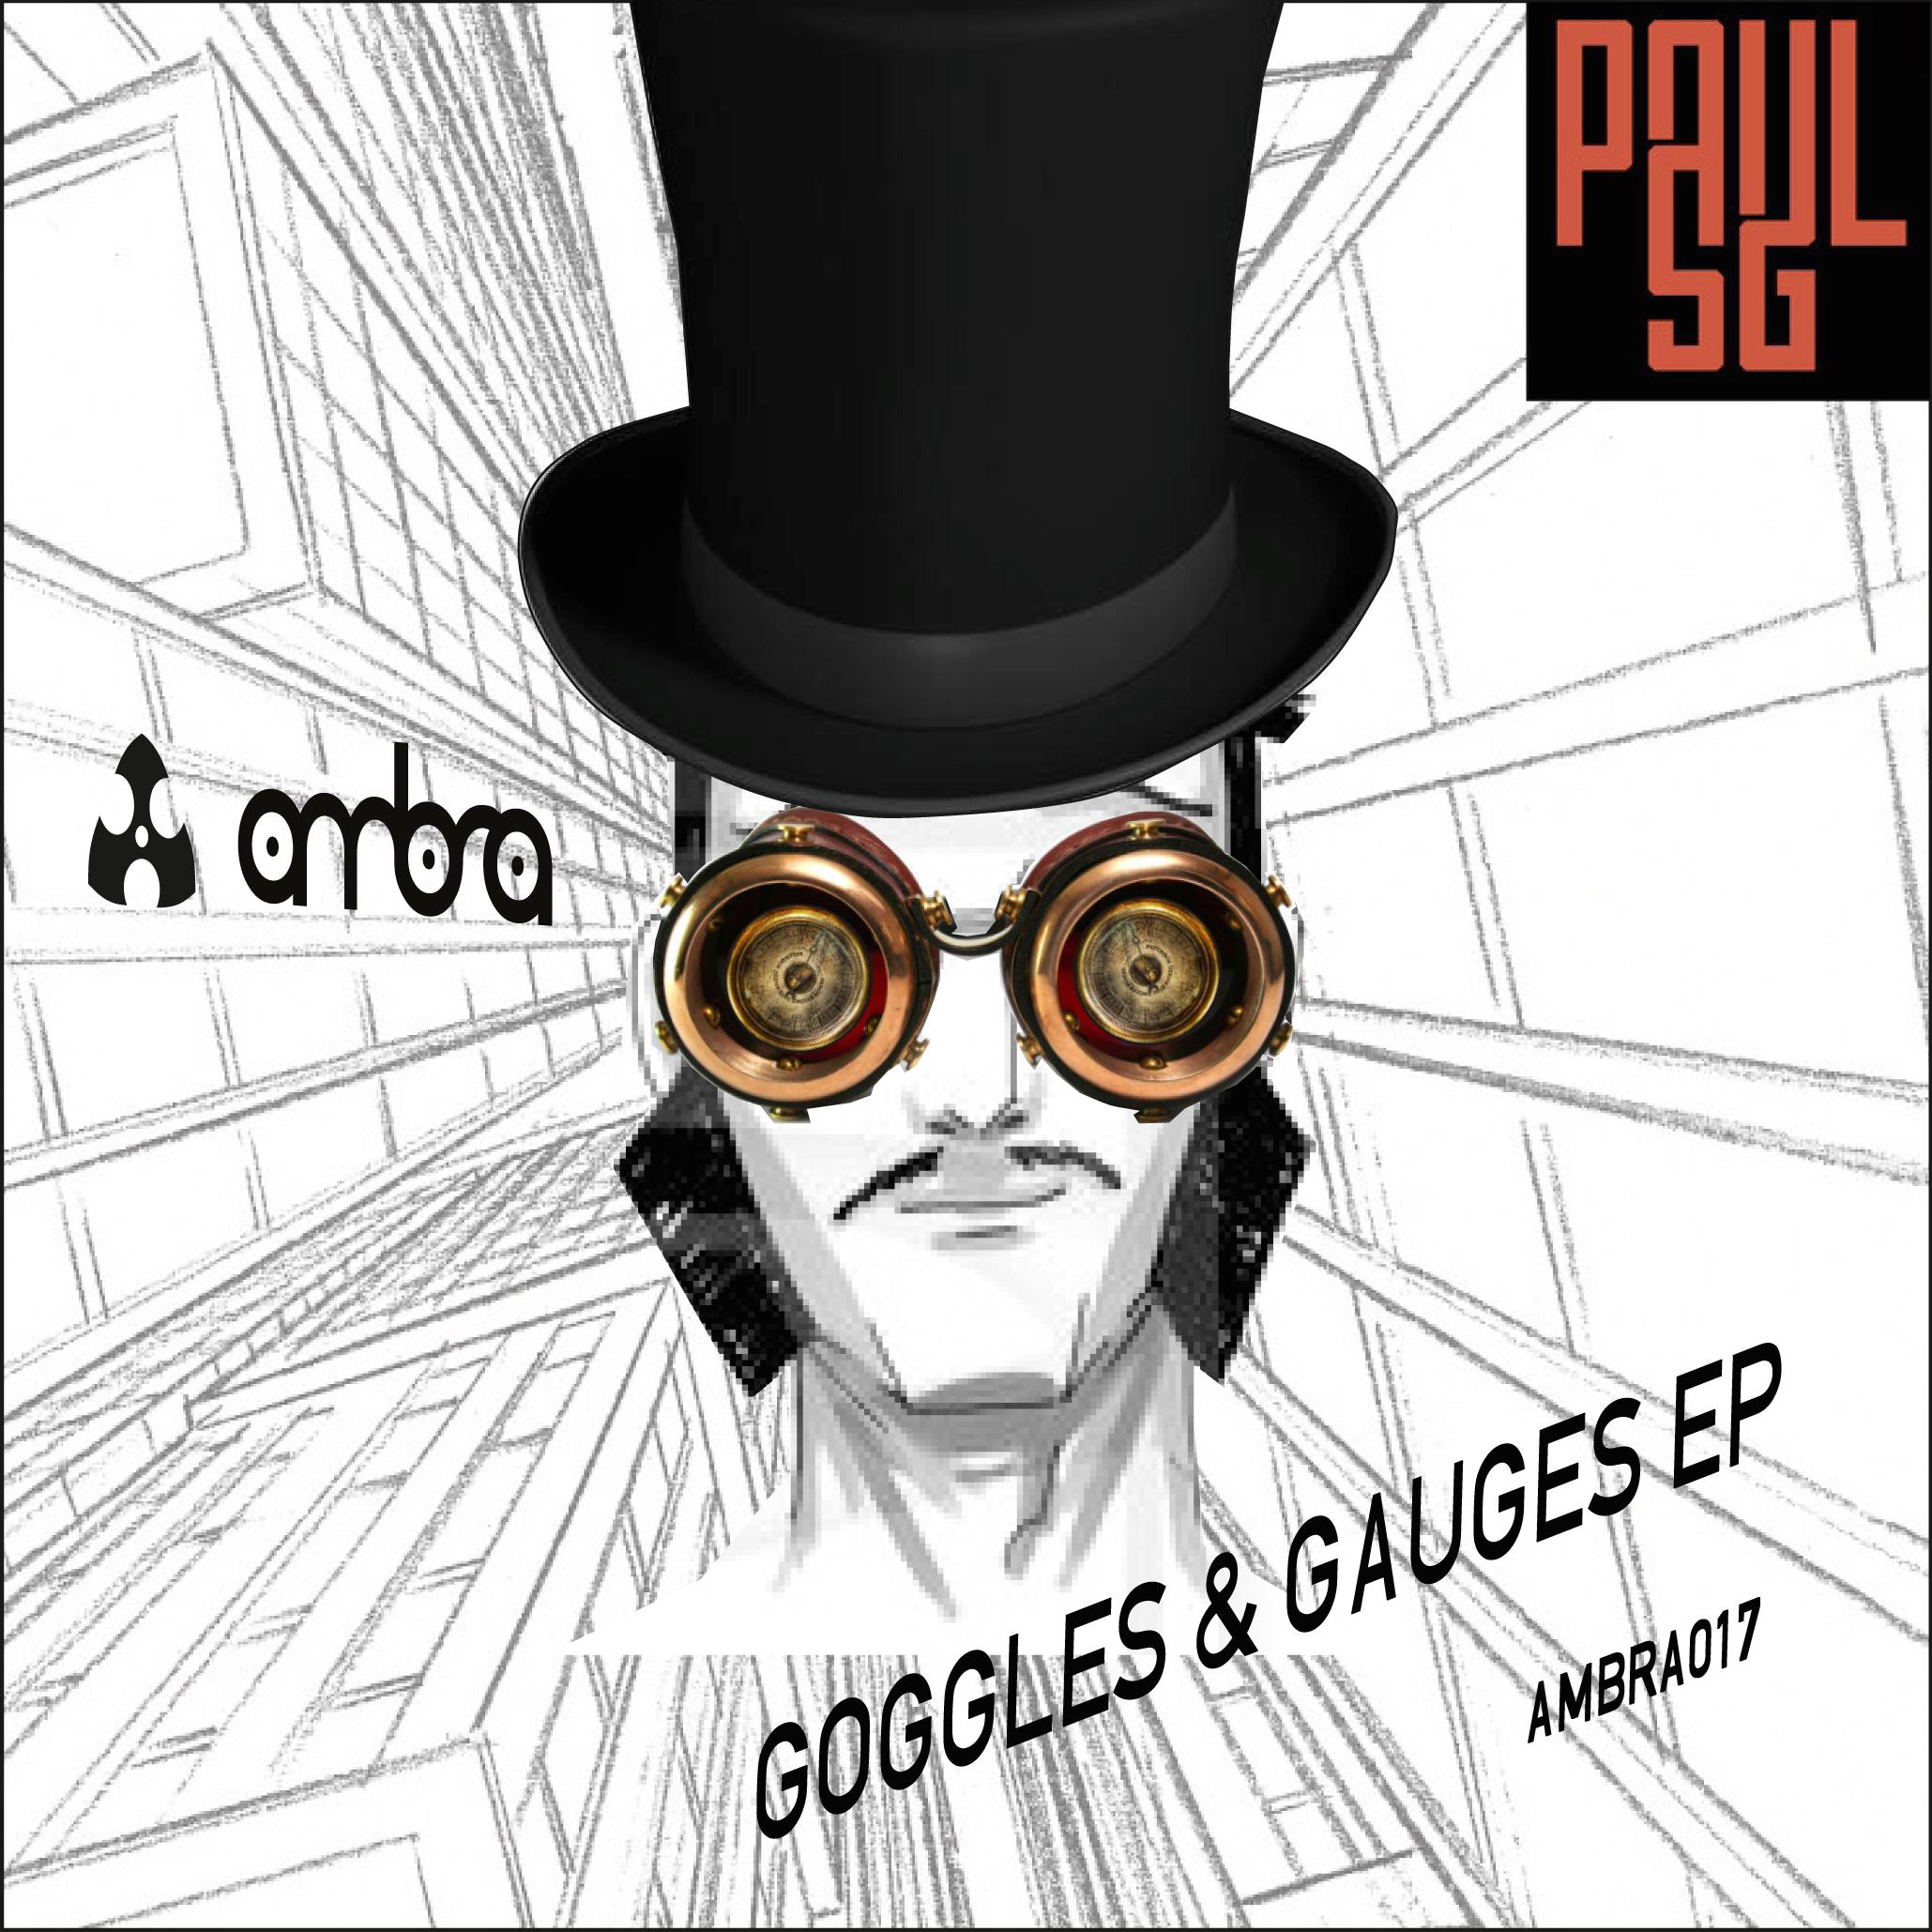 Paul SG - Caragua